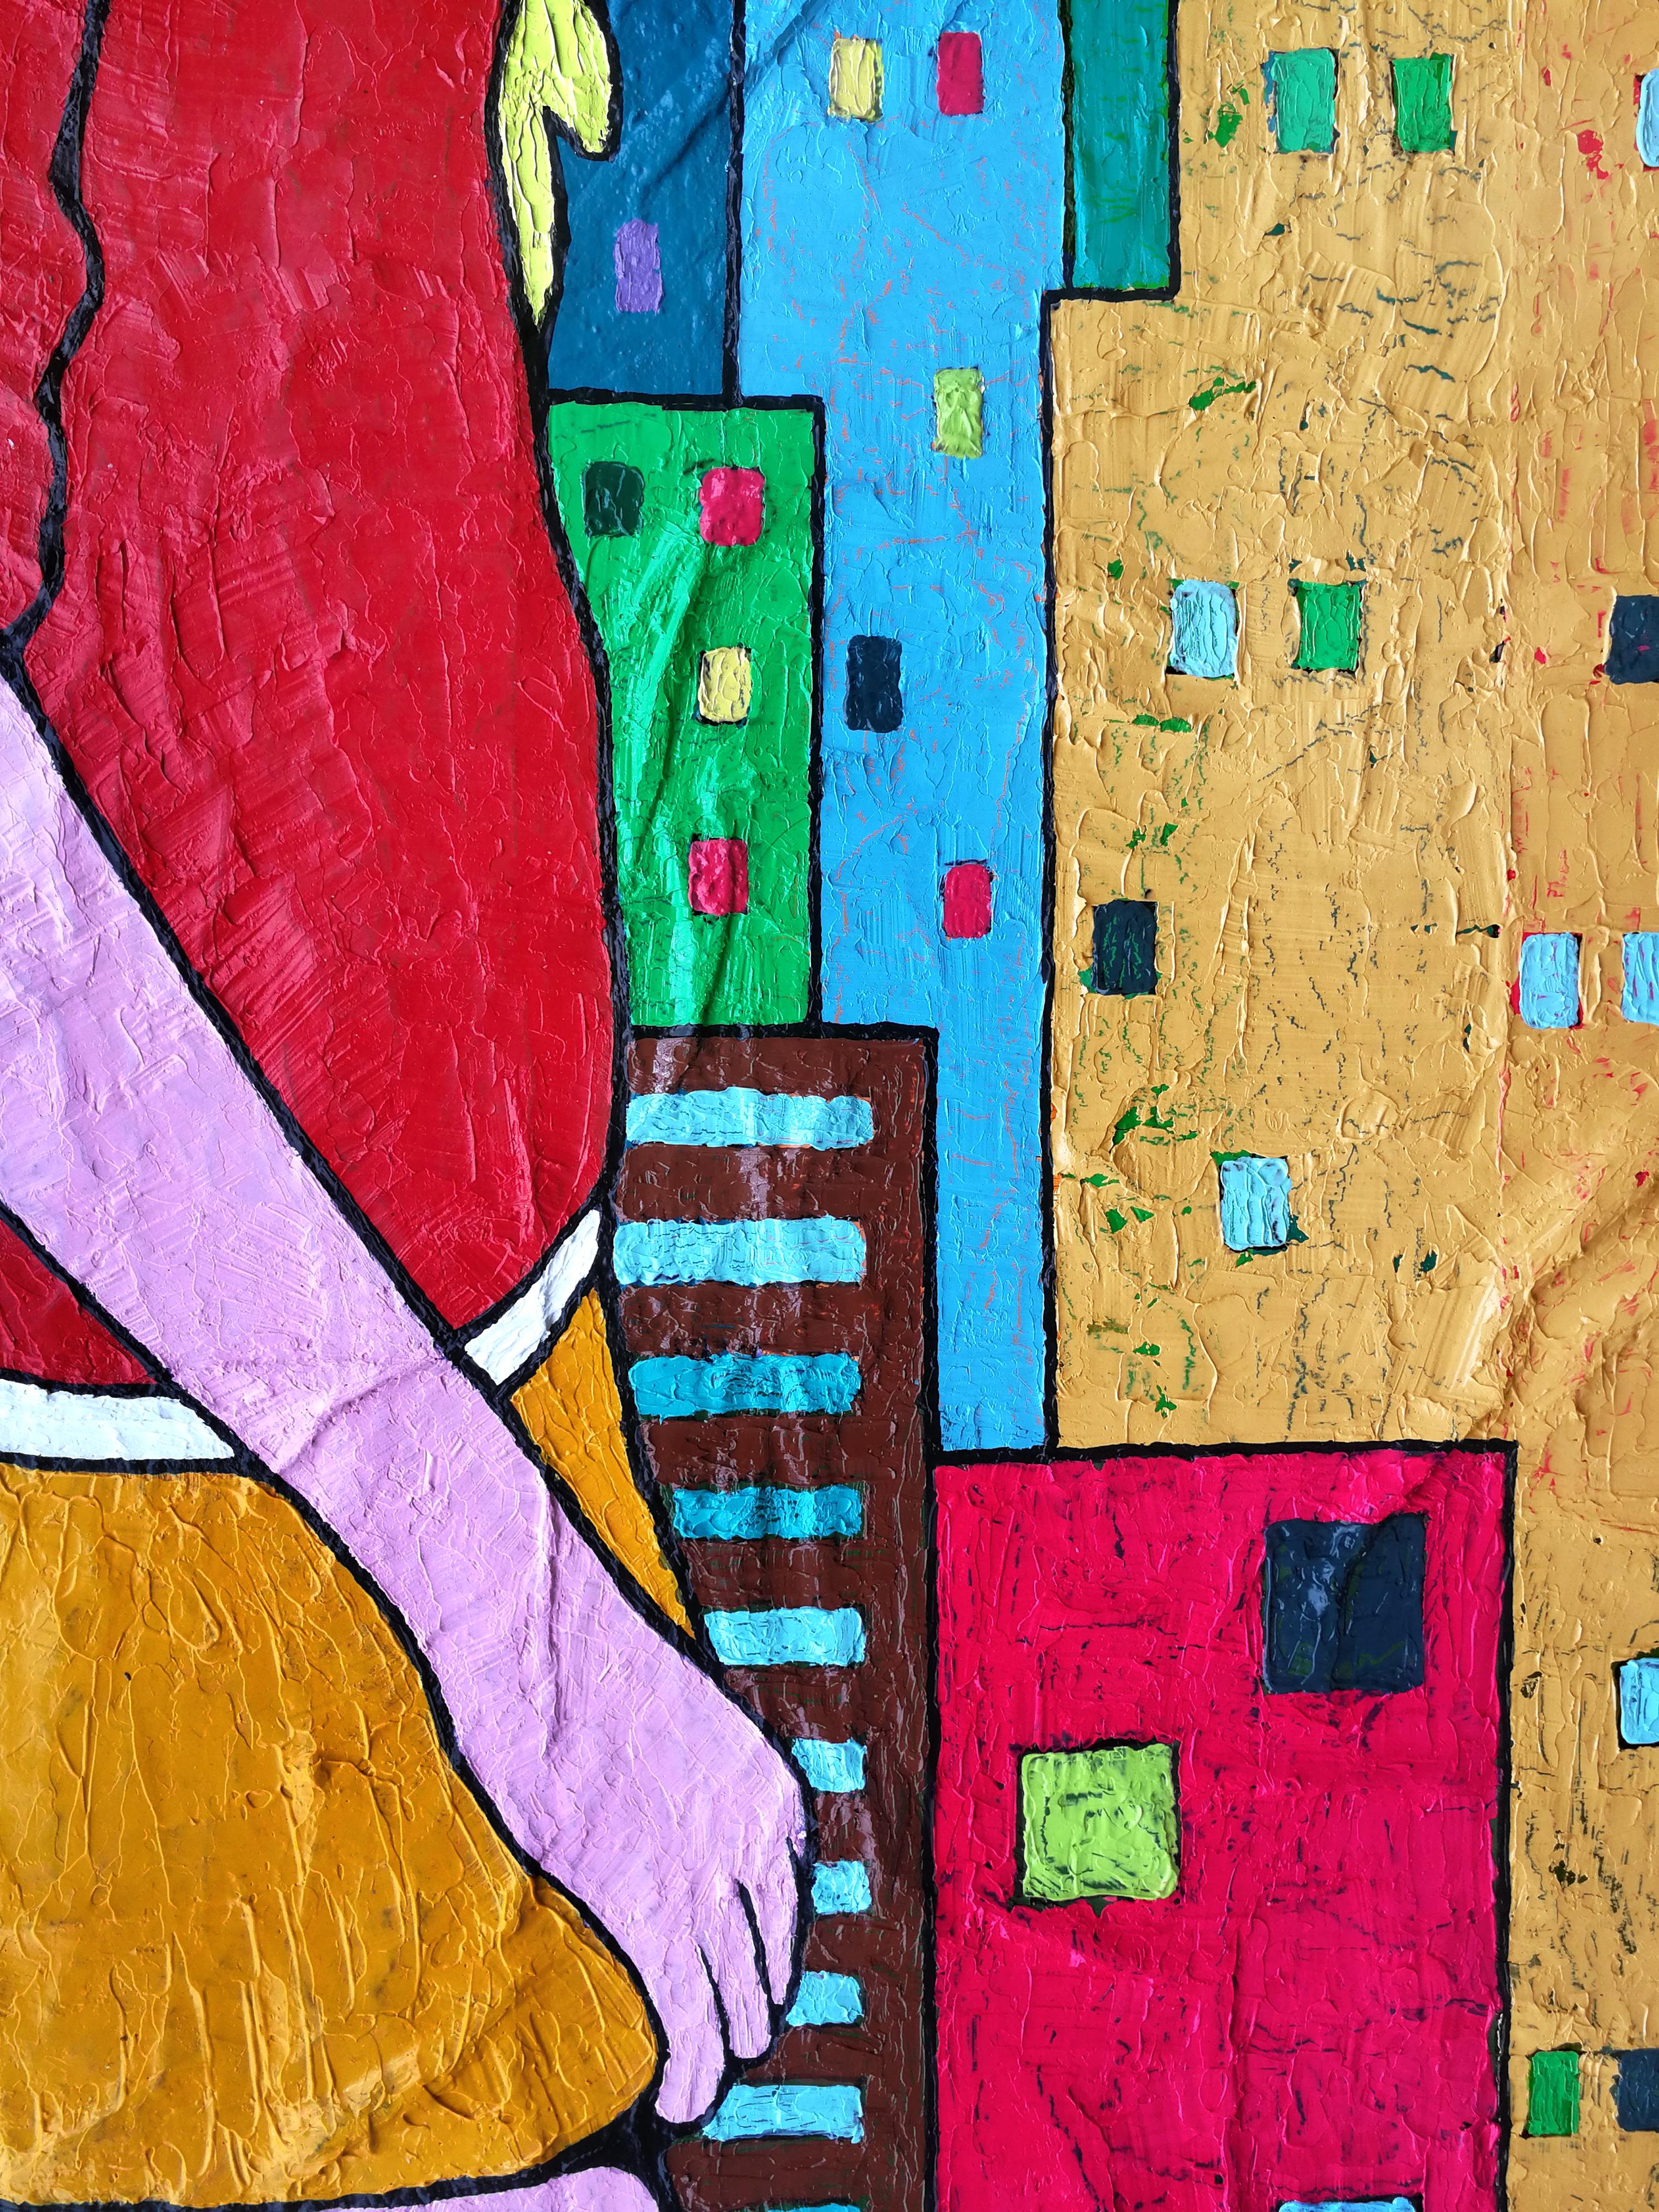 On the Corner Against the Wall of Windows - Rot Gelb Grün Weiß Blau Lila (Beige), Figurative Painting, von Vlado Vesselinov